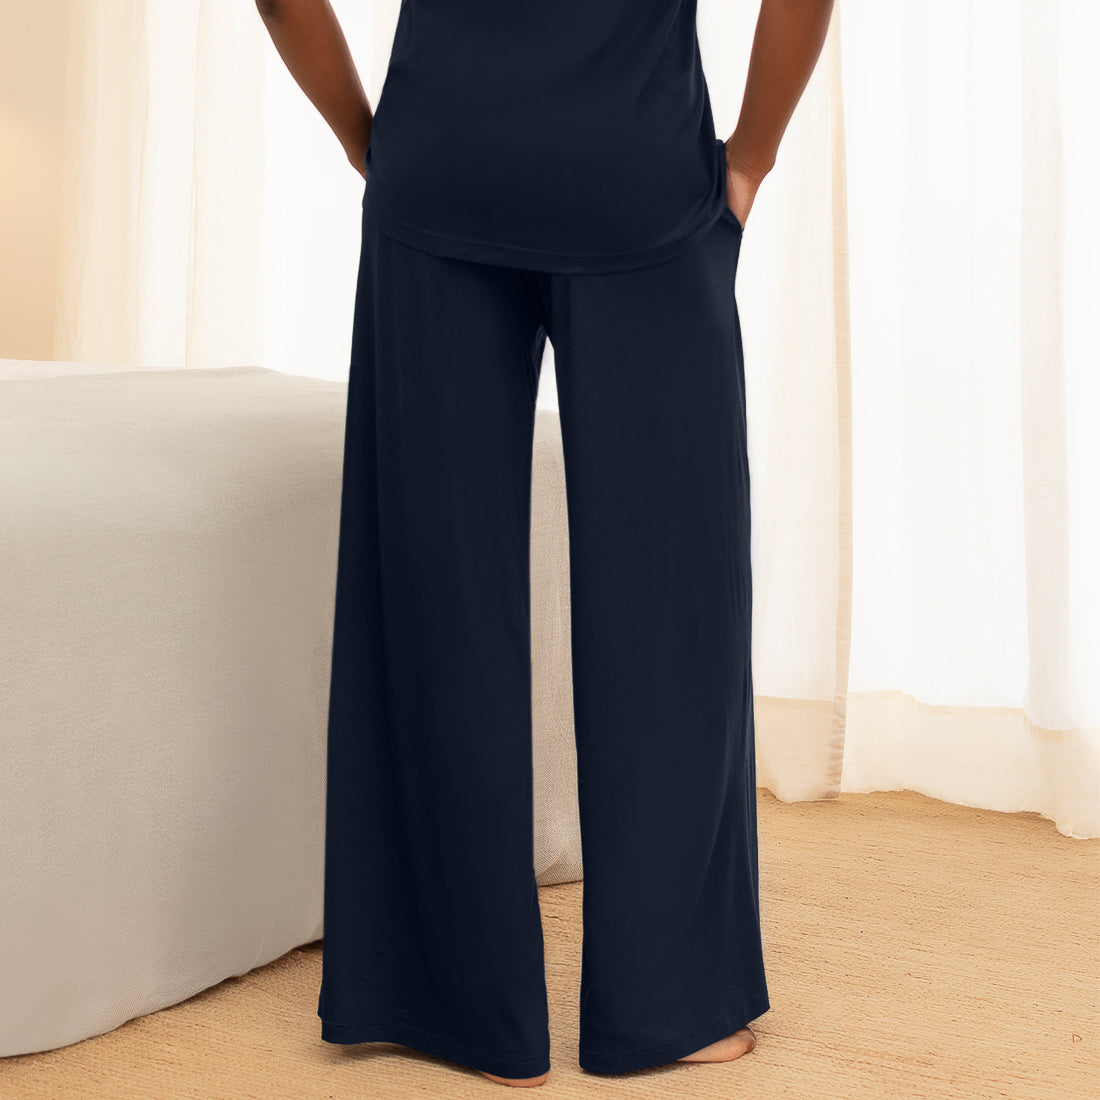 Women's cooling pajamas pants || Navy blue